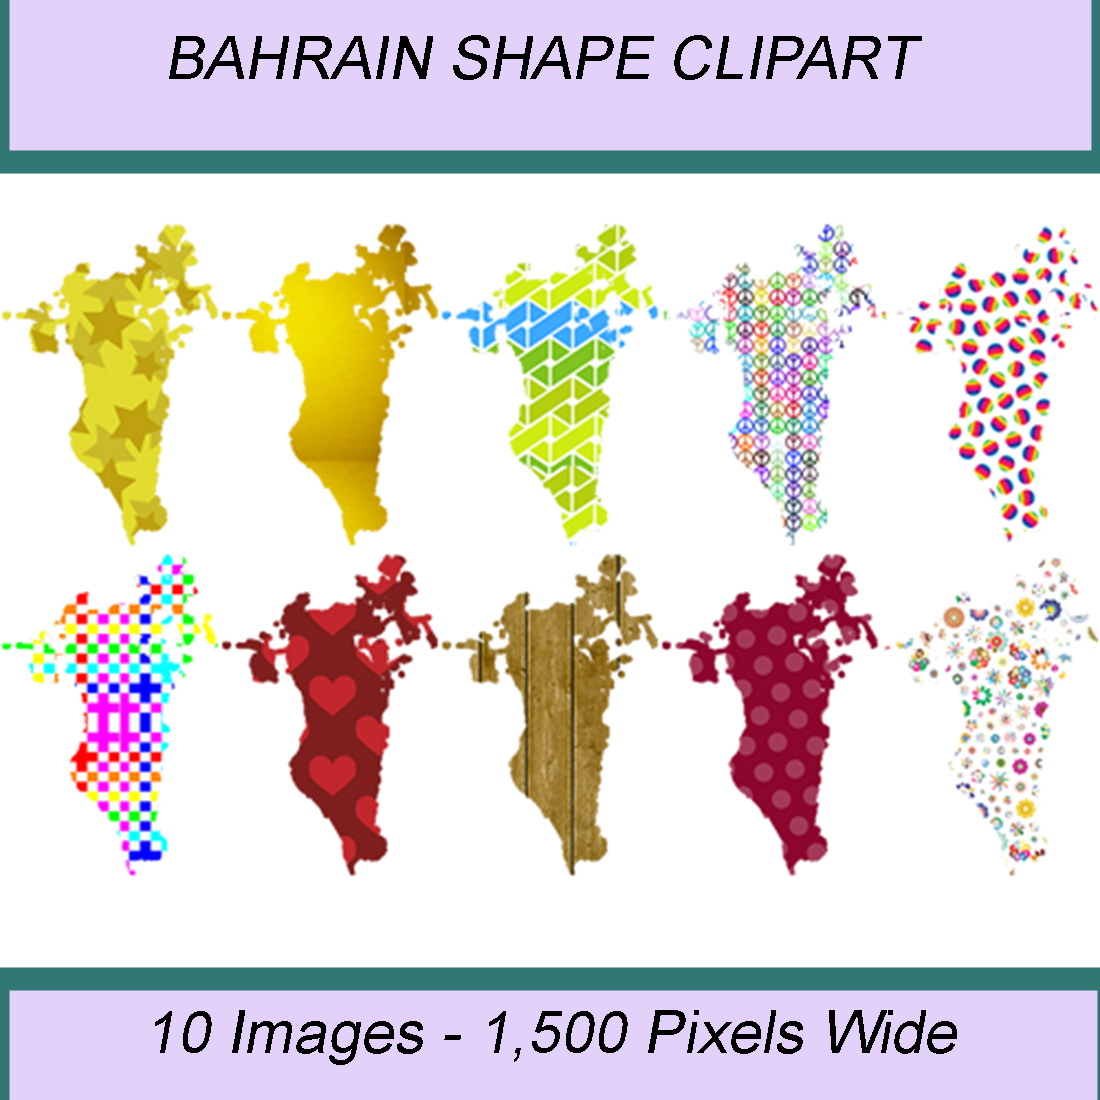 BAHRAIN SHAPE CLIPART ICONS cover image.